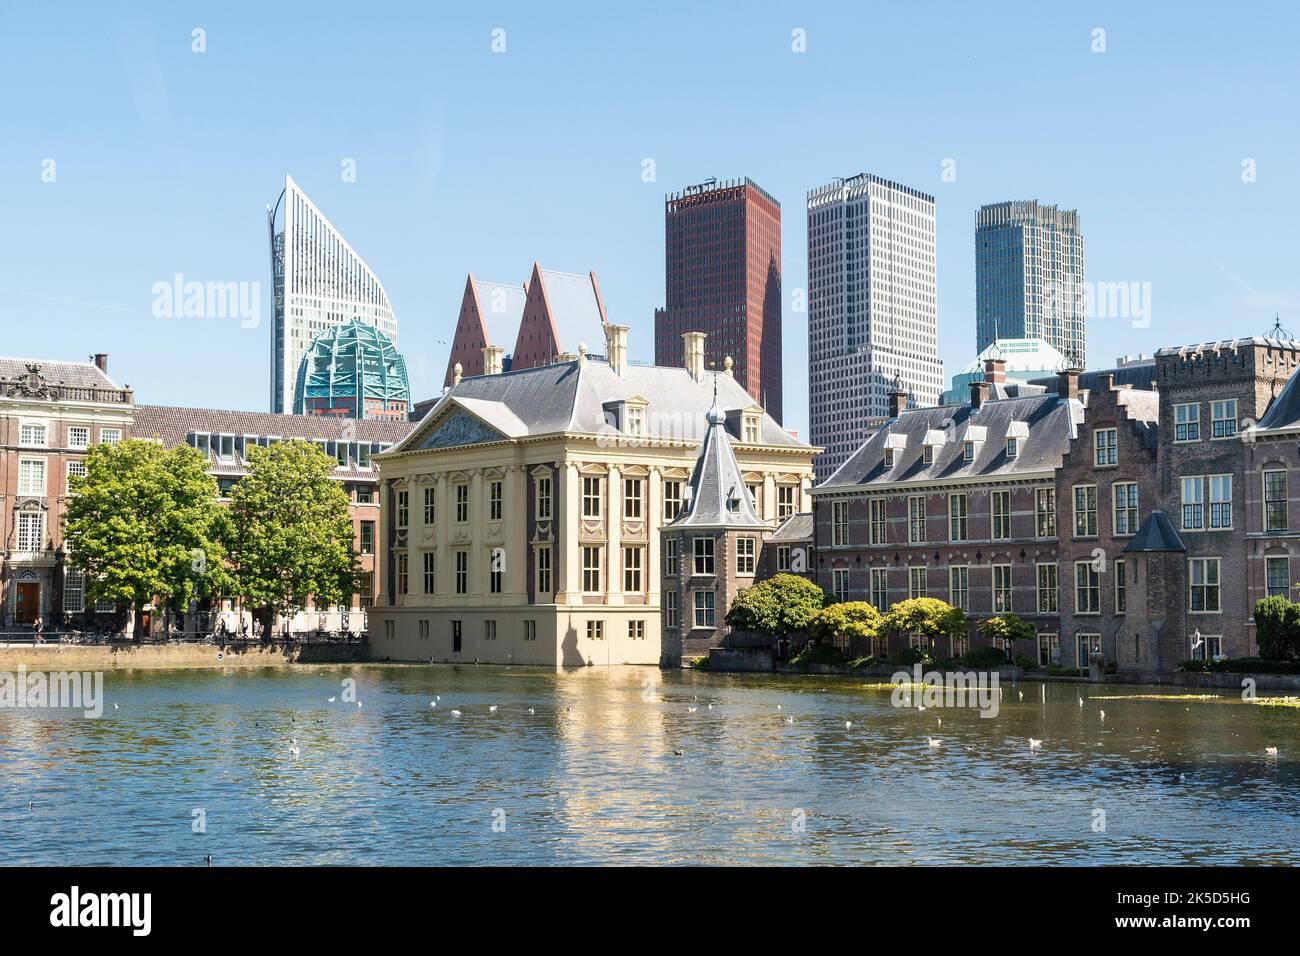 Netherlands, The Hague, Mauritshaus and Binnenhof, modern architecture Stock Photo